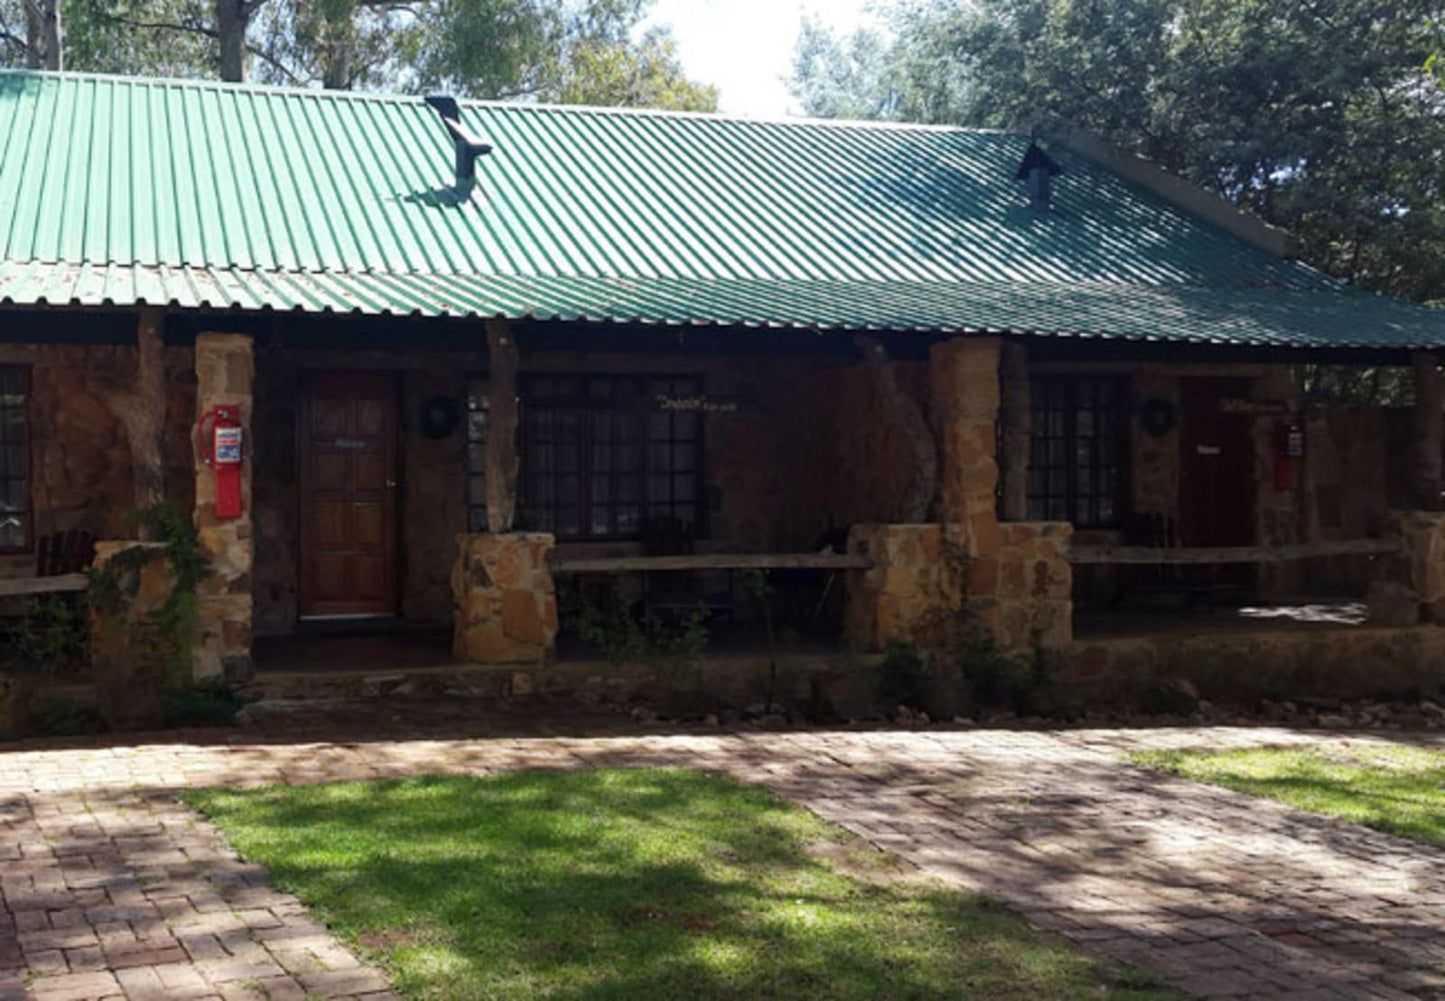 Kliphuisjes Dullstroom Mpumalanga South Africa Cabin, Building, Architecture